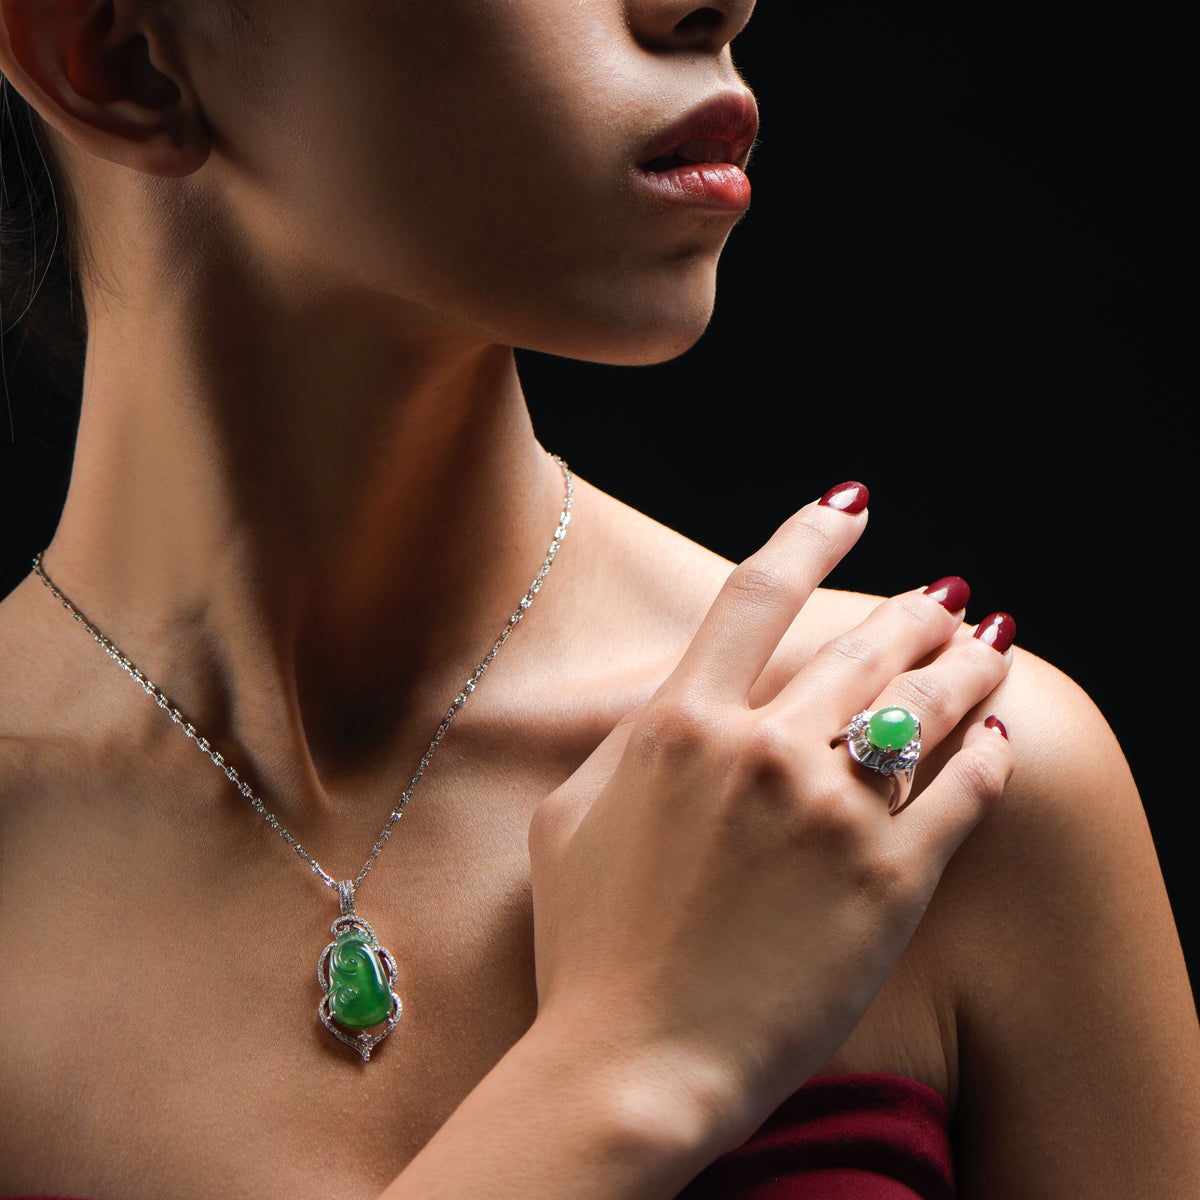 Taiwanese woman wearing an imperial green jade ring with green jade Ruyi pendant